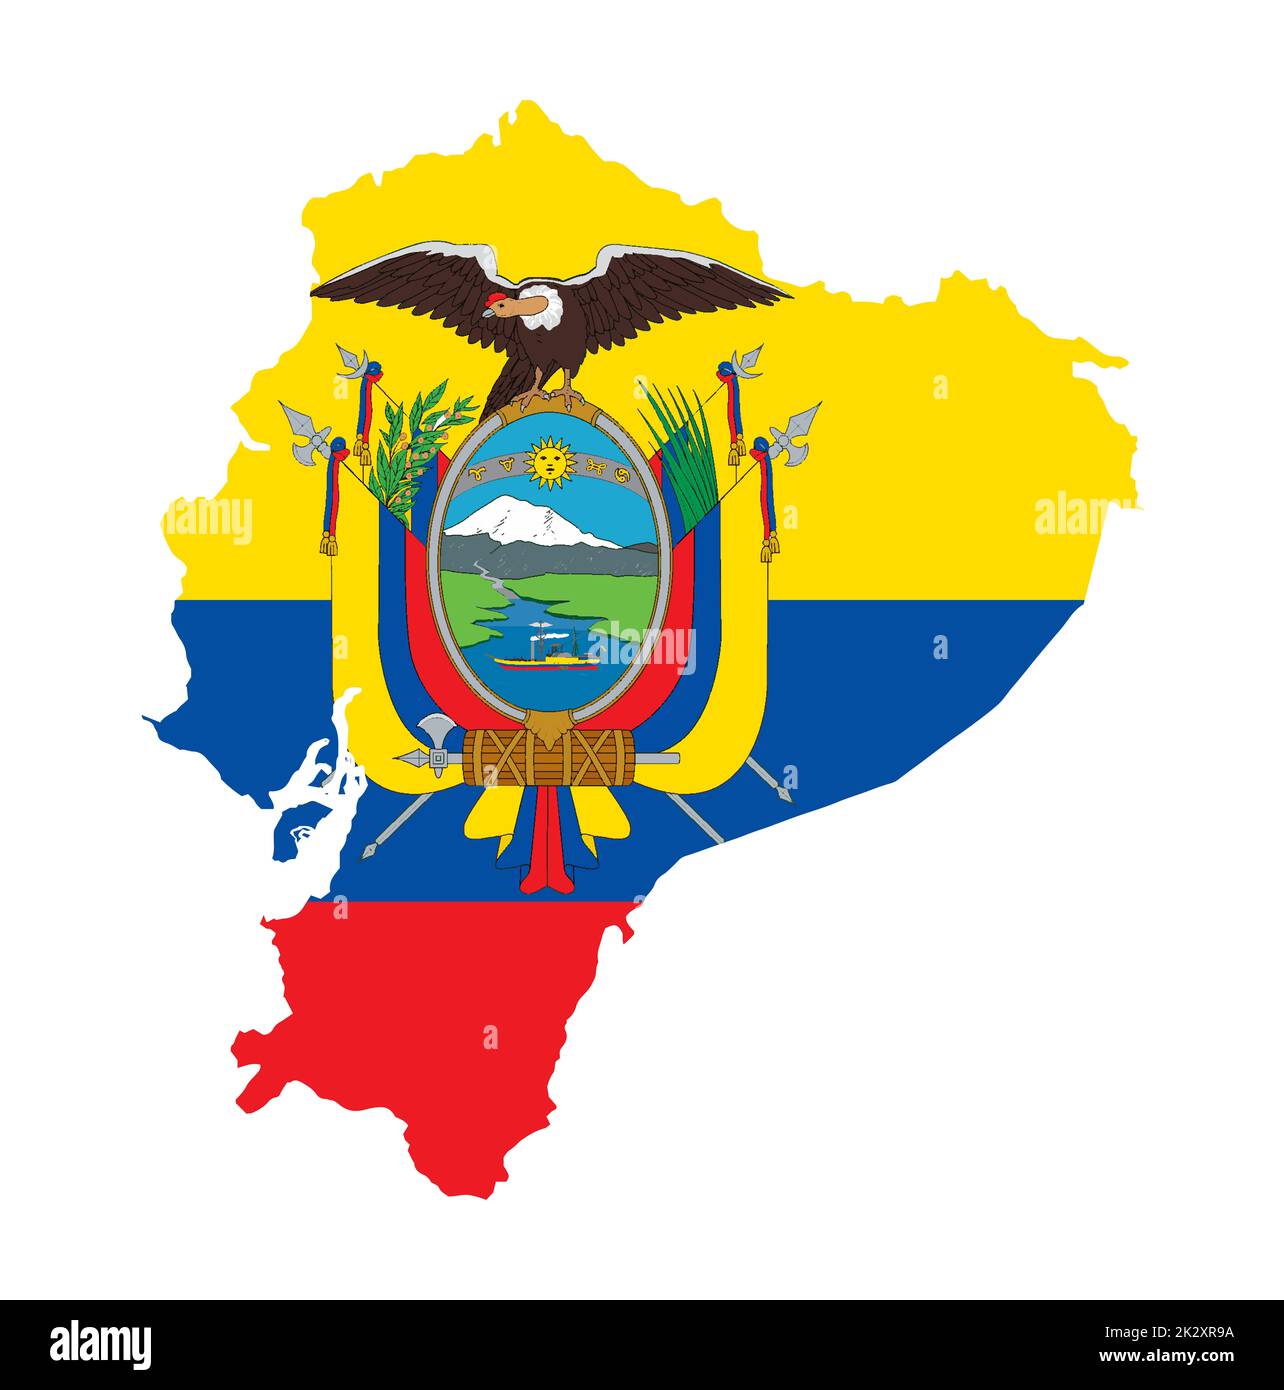 Ecuador Silhouette Map Over The National Flag Stock Photo